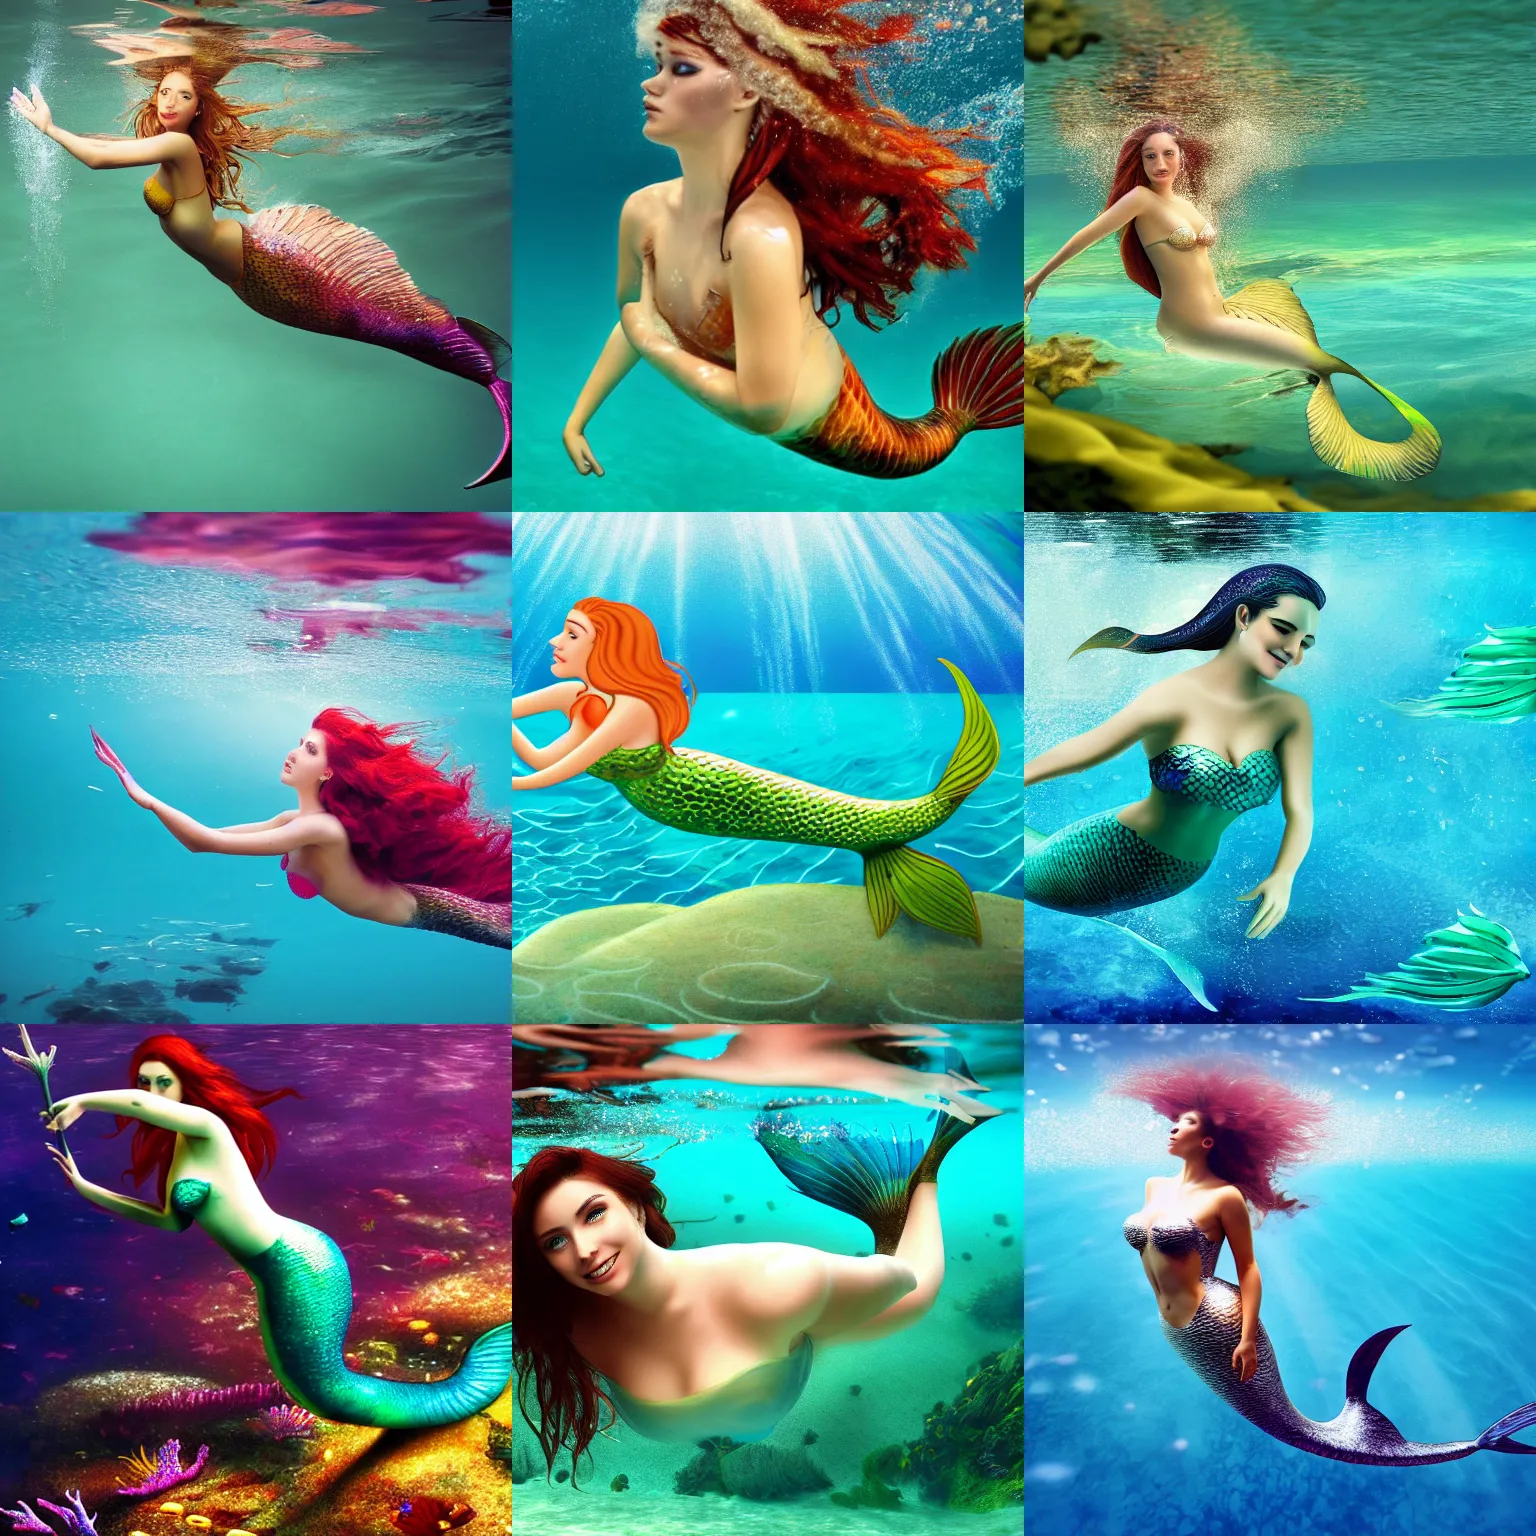 Prompt: beautiful mermaid swimming underwater, 4k